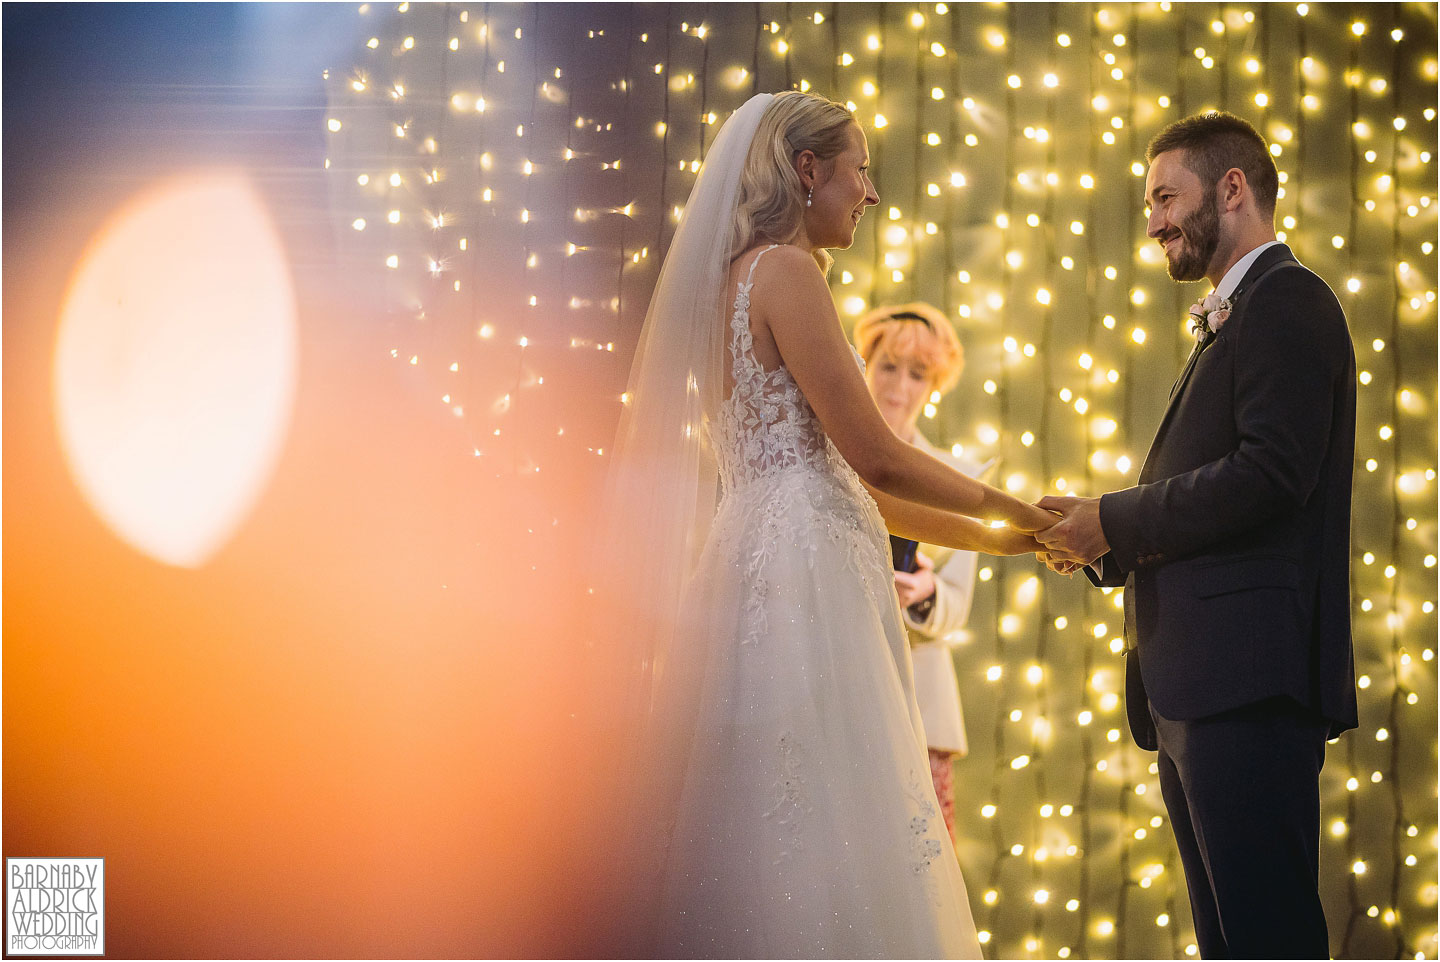 Civil ceremony photo at Wharfedale Grange near Harewood by Yorkshire wedding photographer Barnaby Aldrick